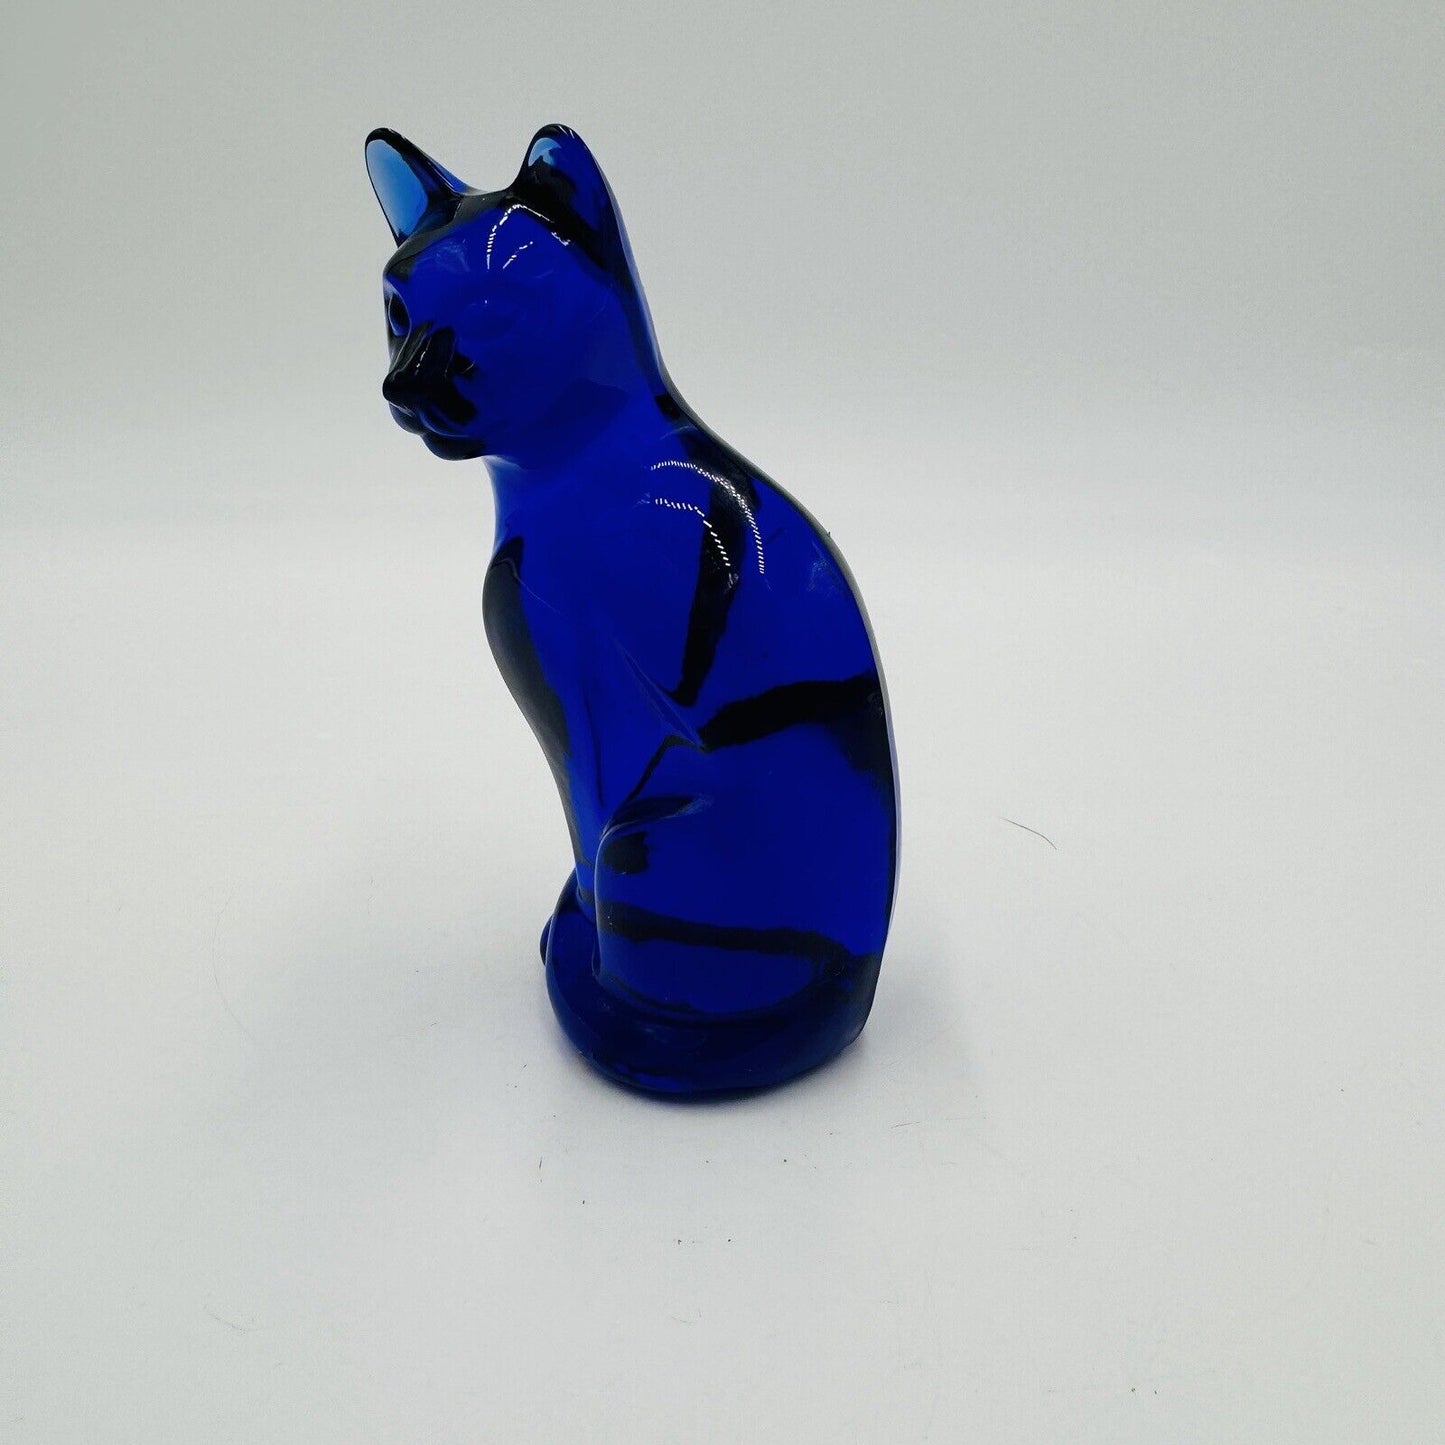 Vintage Fenton Art Glass Cobalt Blue Cat 95th Anniversary Figurine 5"